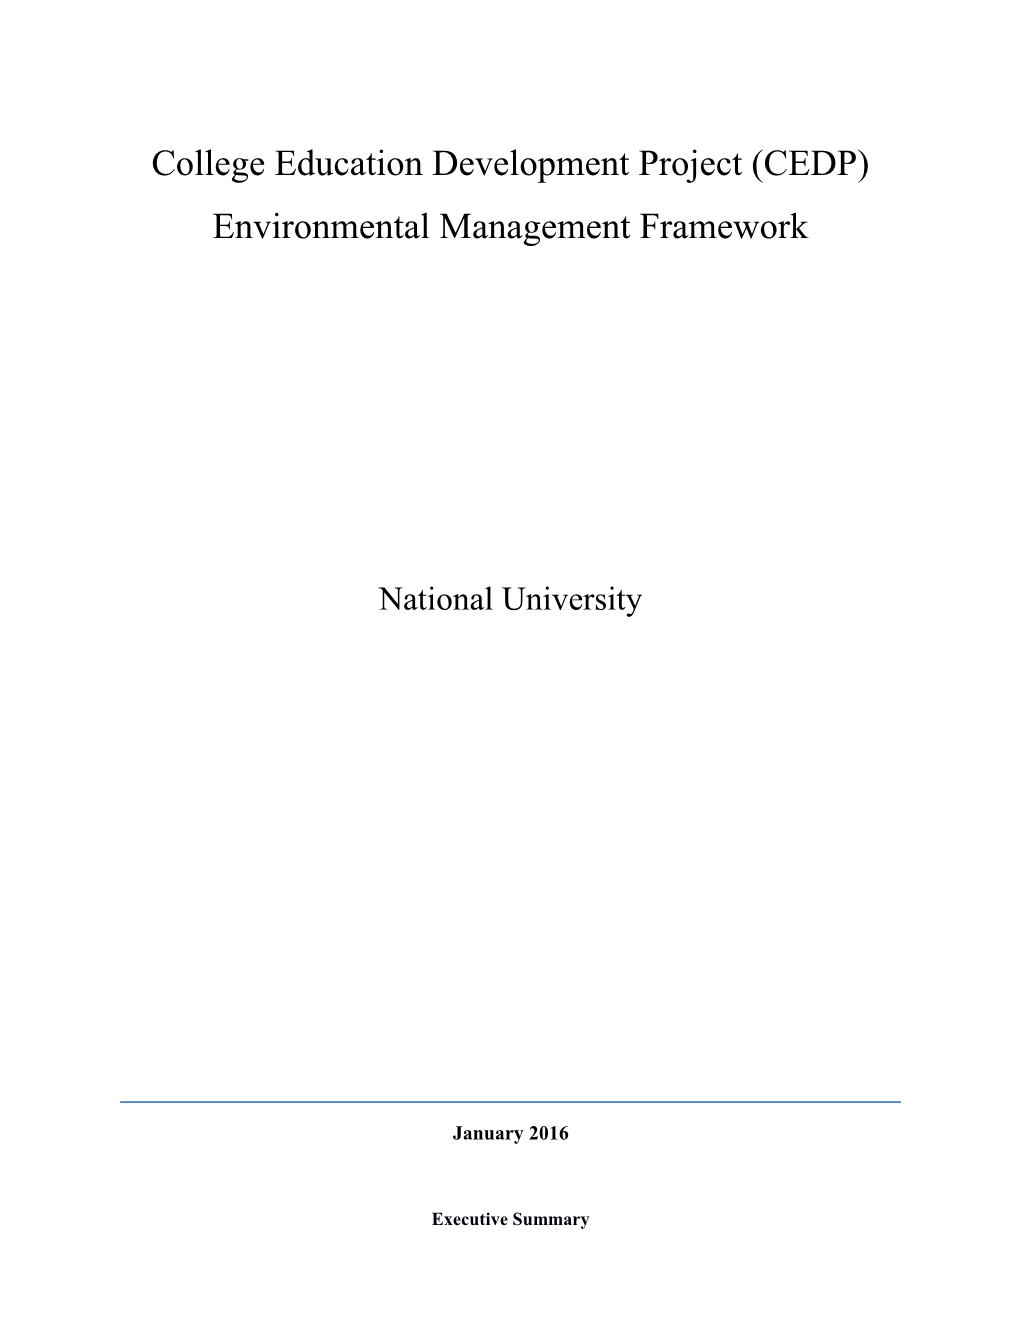 College Education Development Project (CEDP) Environmental Management Framework